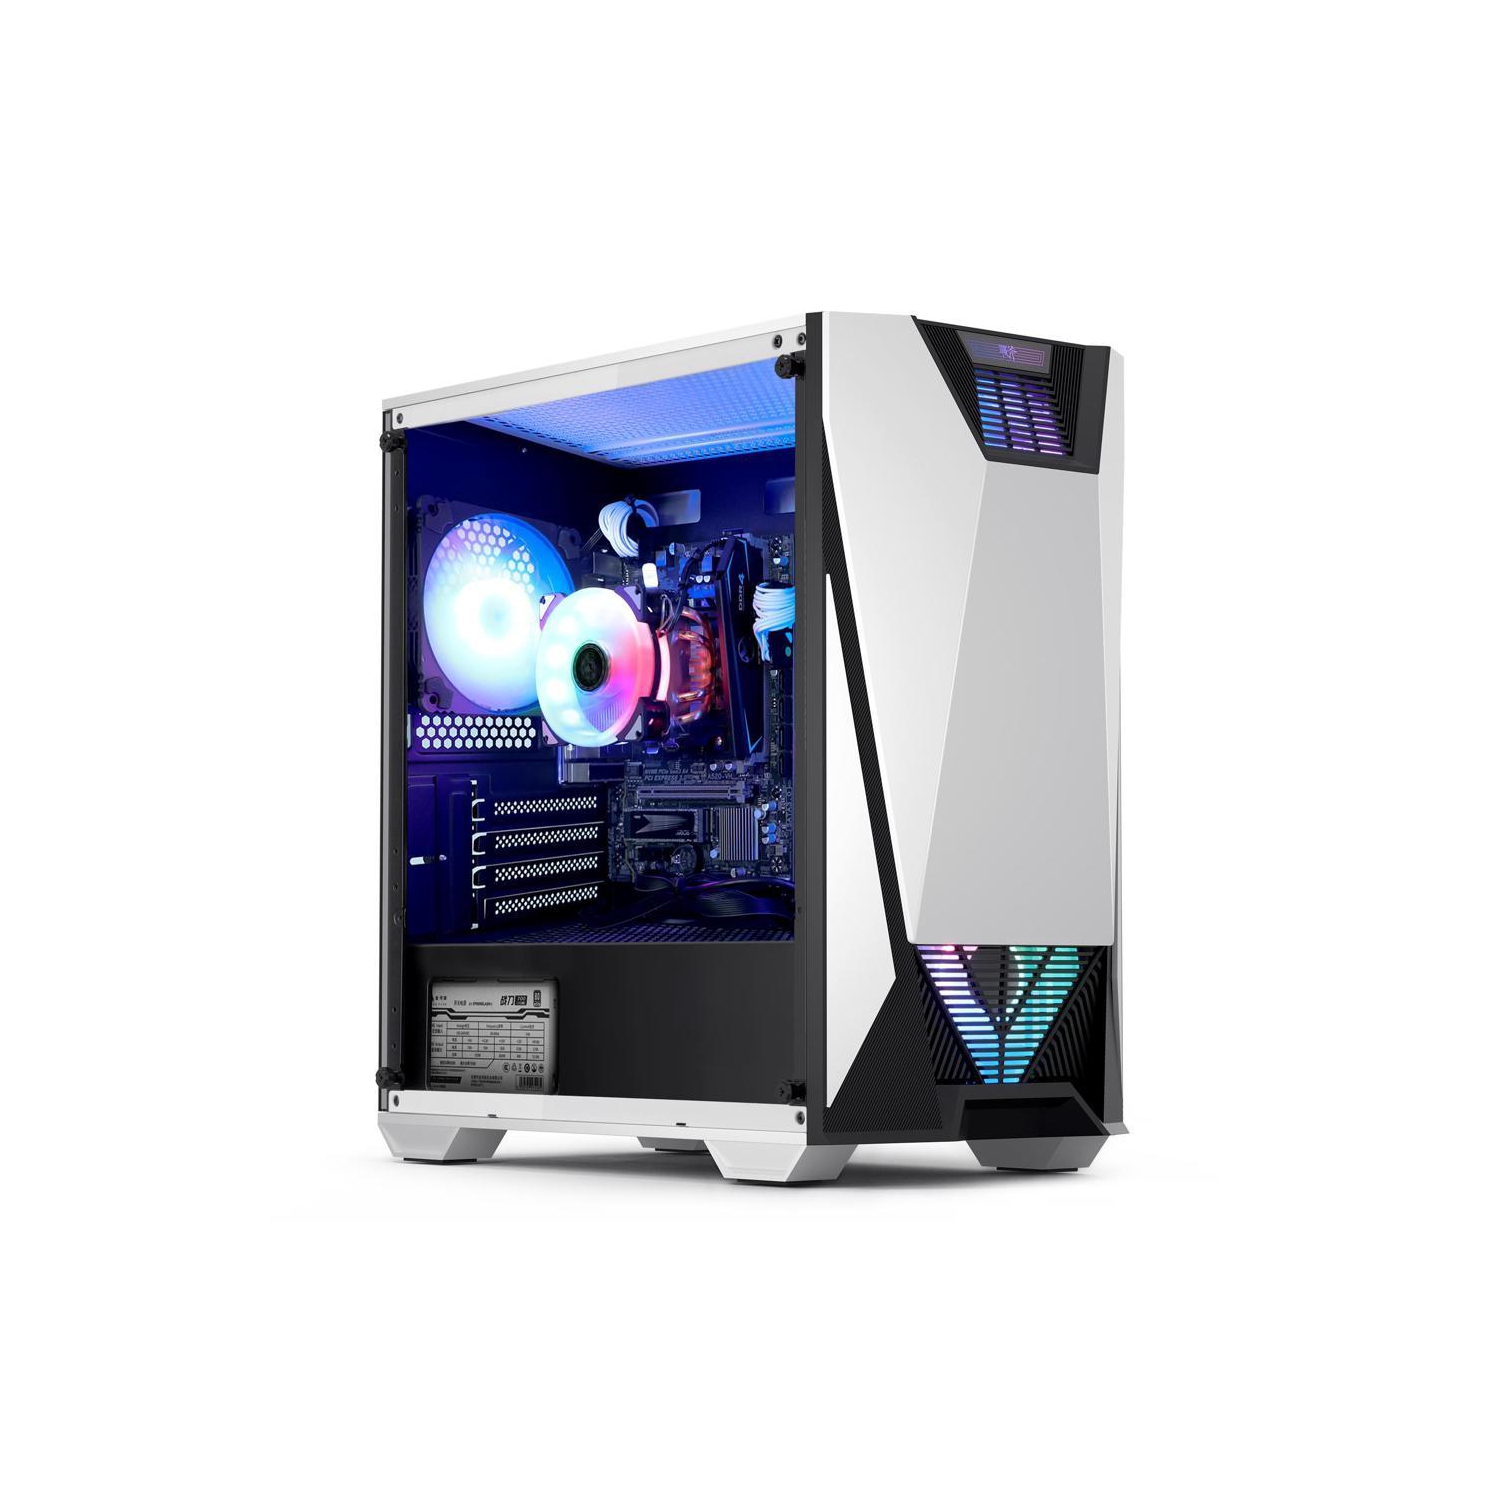 Hoengager Poseidon Gaming Desktop - Intel Core i5-12600K 10-Core 3.7GHz- 16GB DDR4 3200MHz - 500GB M.2 NVMe SSD + 1TB HDD- WIFI -RGB Fans - Windows 11 Pro Desktop Computer-White